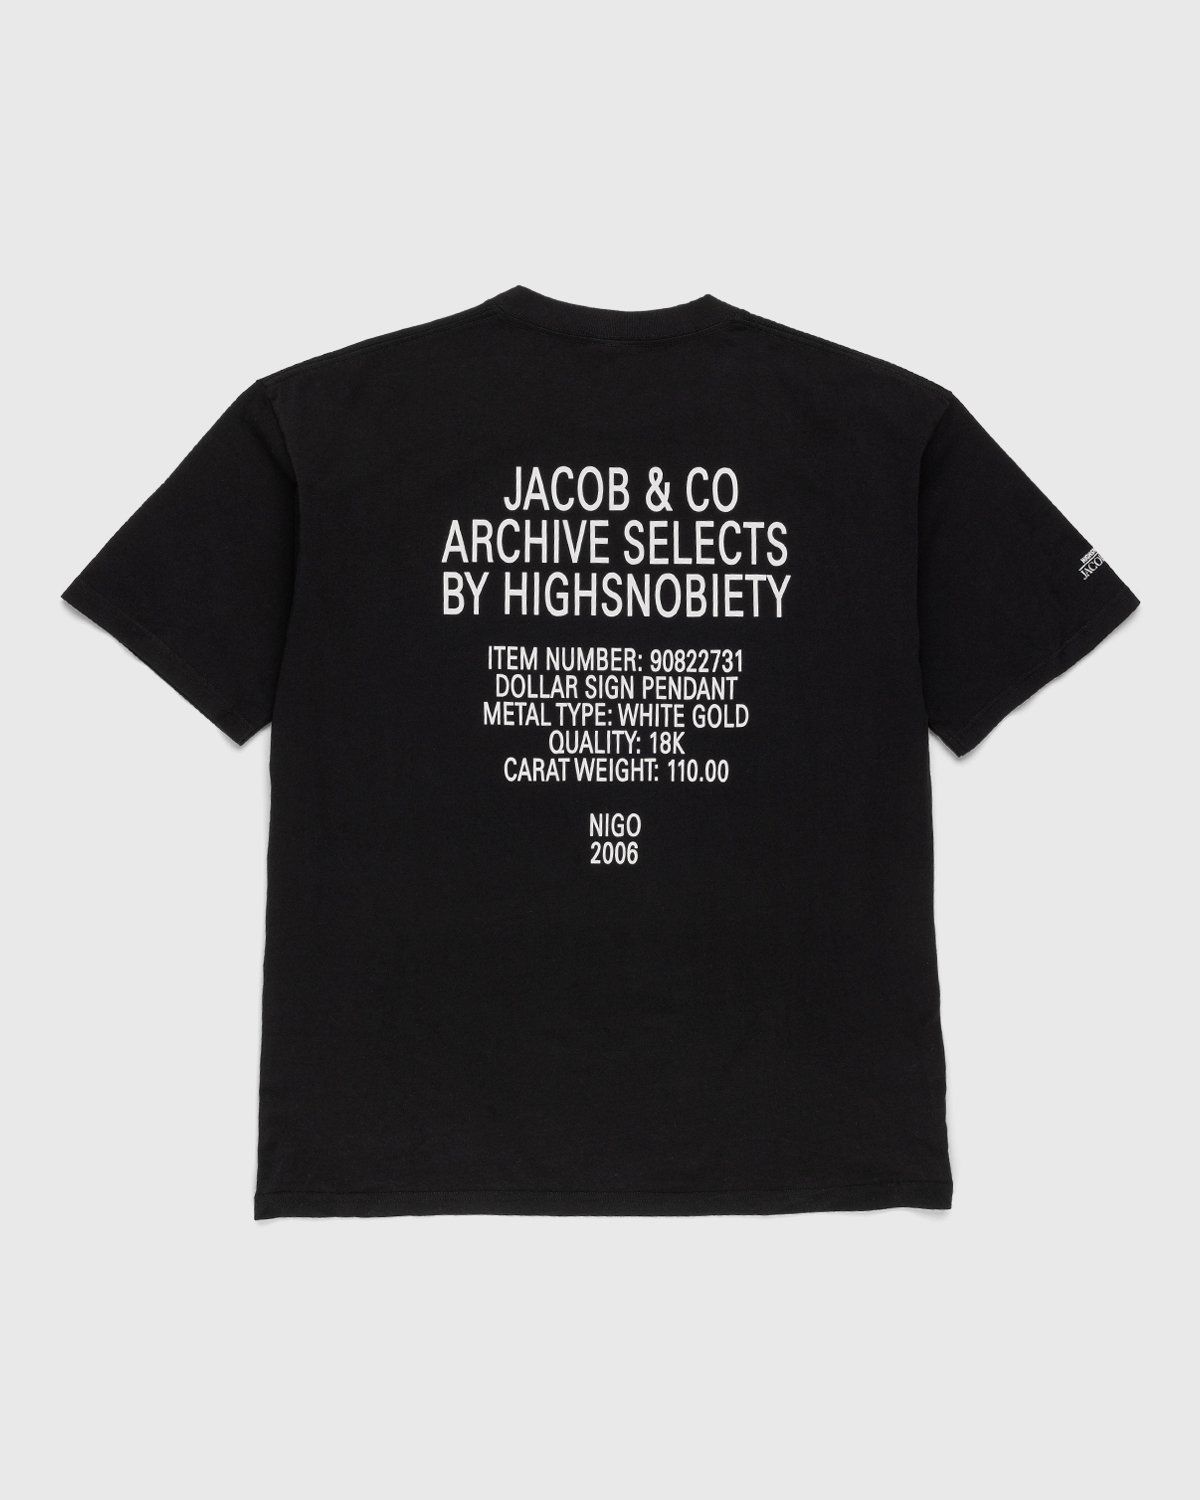 Jacob & Co. x Highsnobiety – Dollar Sign Pendant T-Shirt Black - Image 2